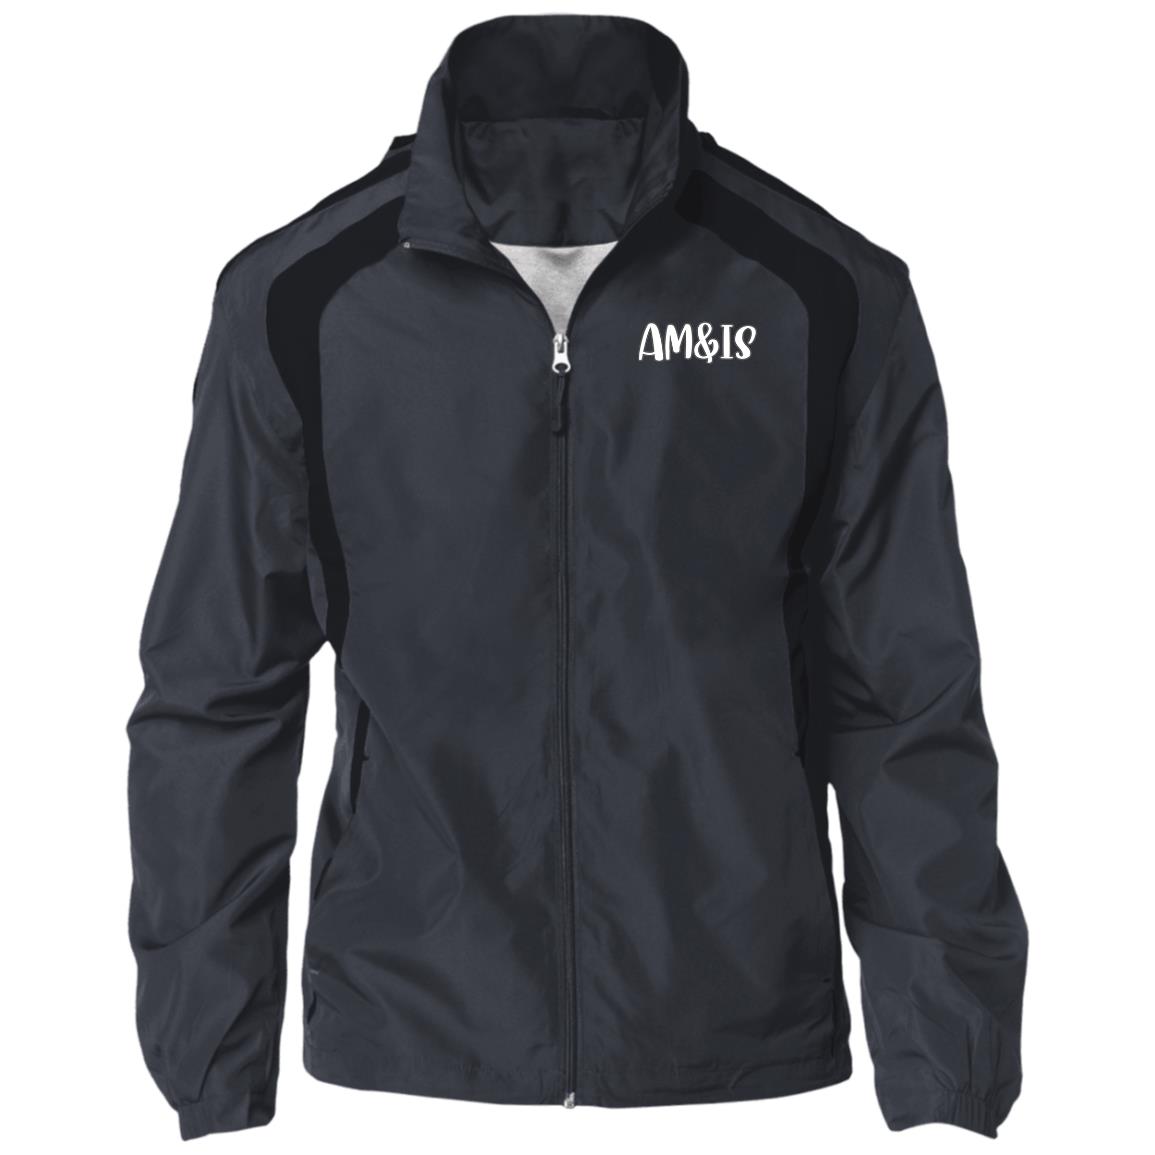 GRAPHITE/BLACK - AM&IS Activewear Jersey-Lined Raglan Jacket - mens jacket at TFC&H Co.